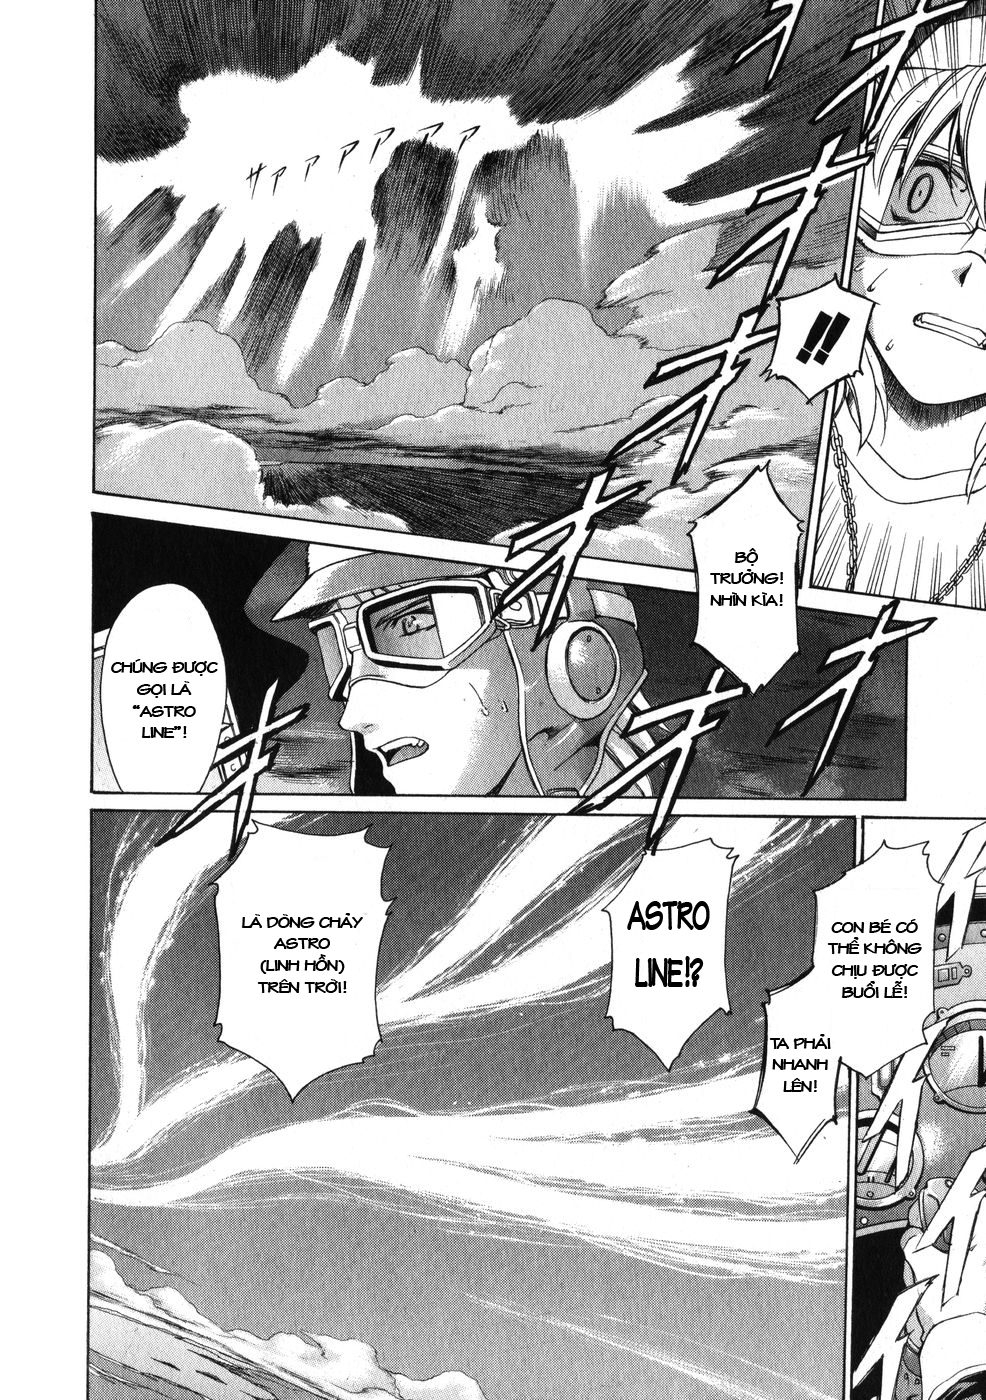 [Manga] Chrono Crusade (Đọc online tại SSF) CHRNO-CRUSADE-01-130